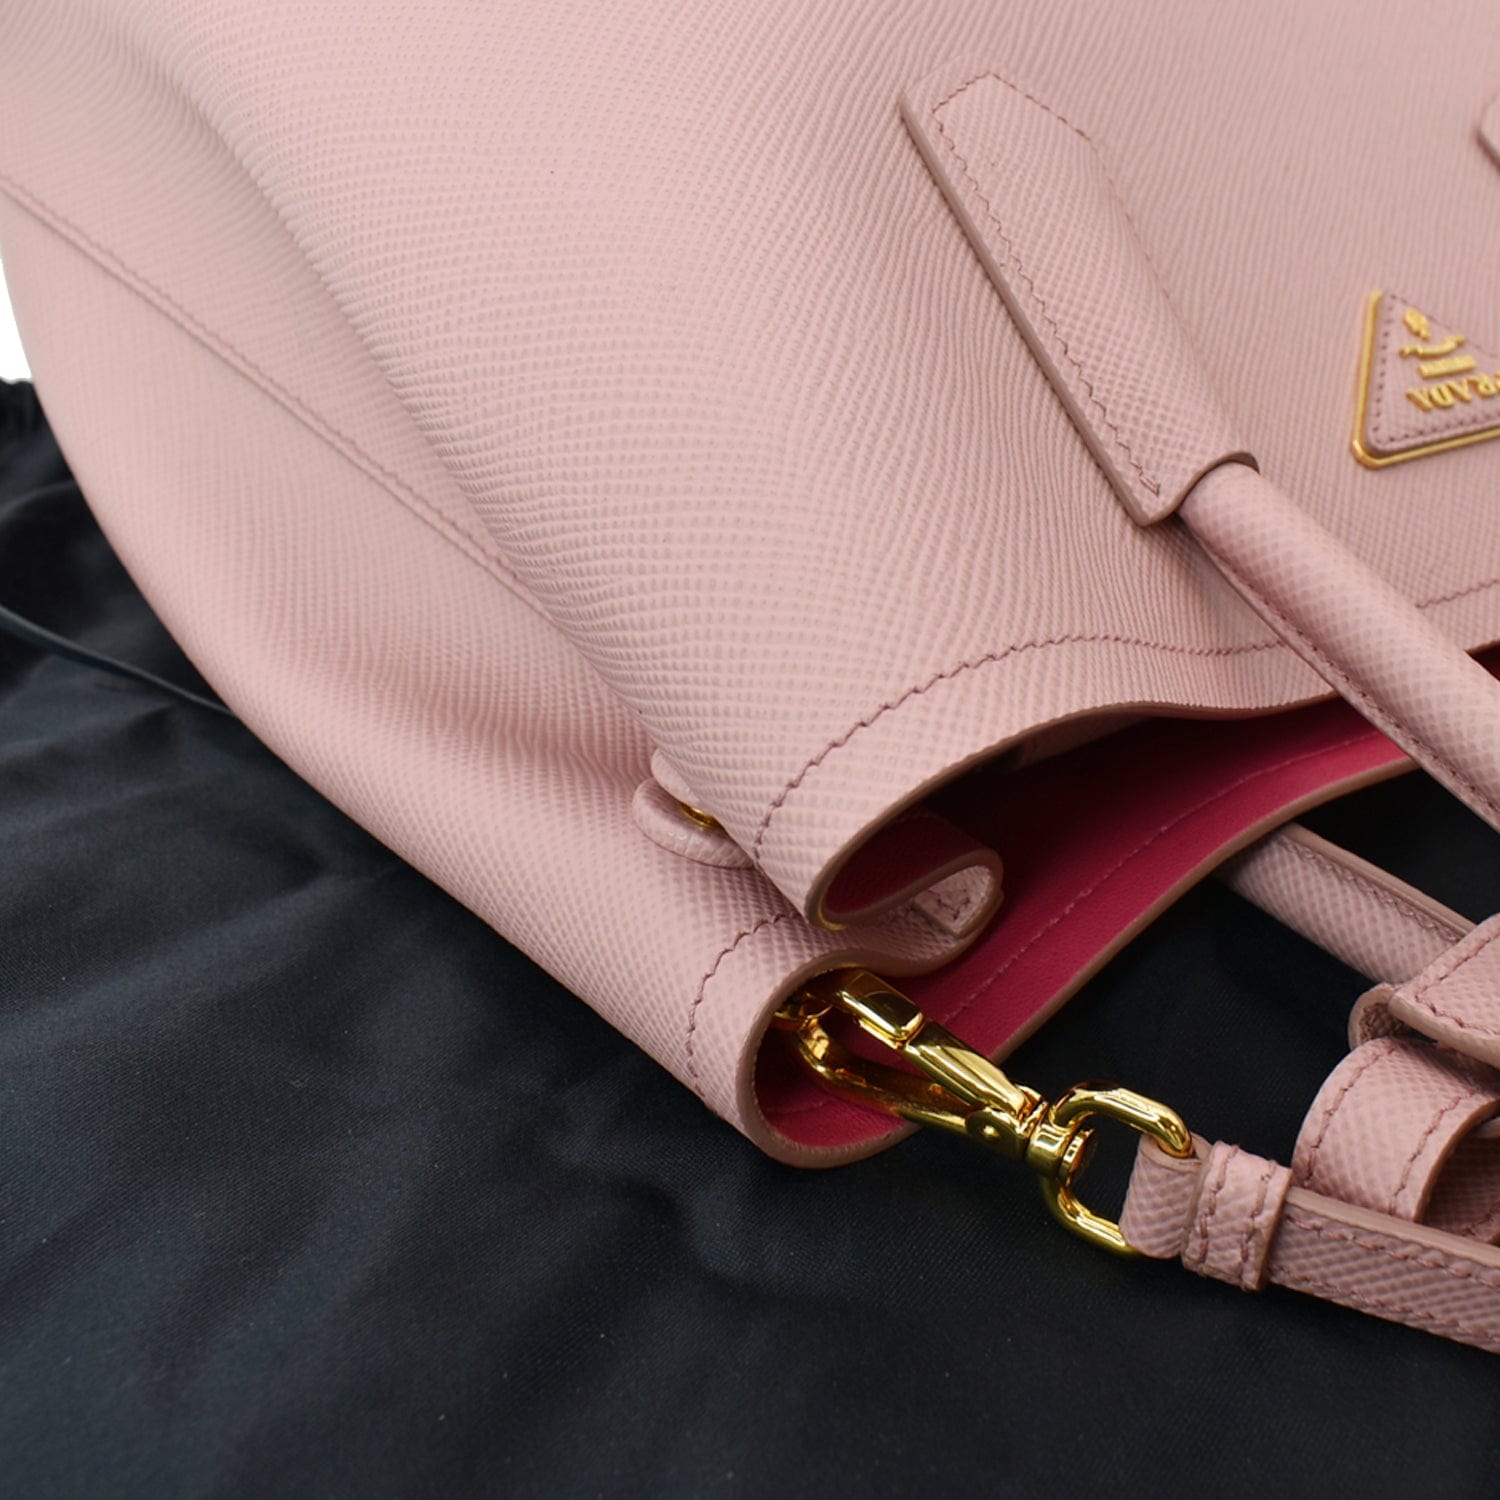 PRADA Double Handle Saffiano Leather Tote Bag Petal Pink